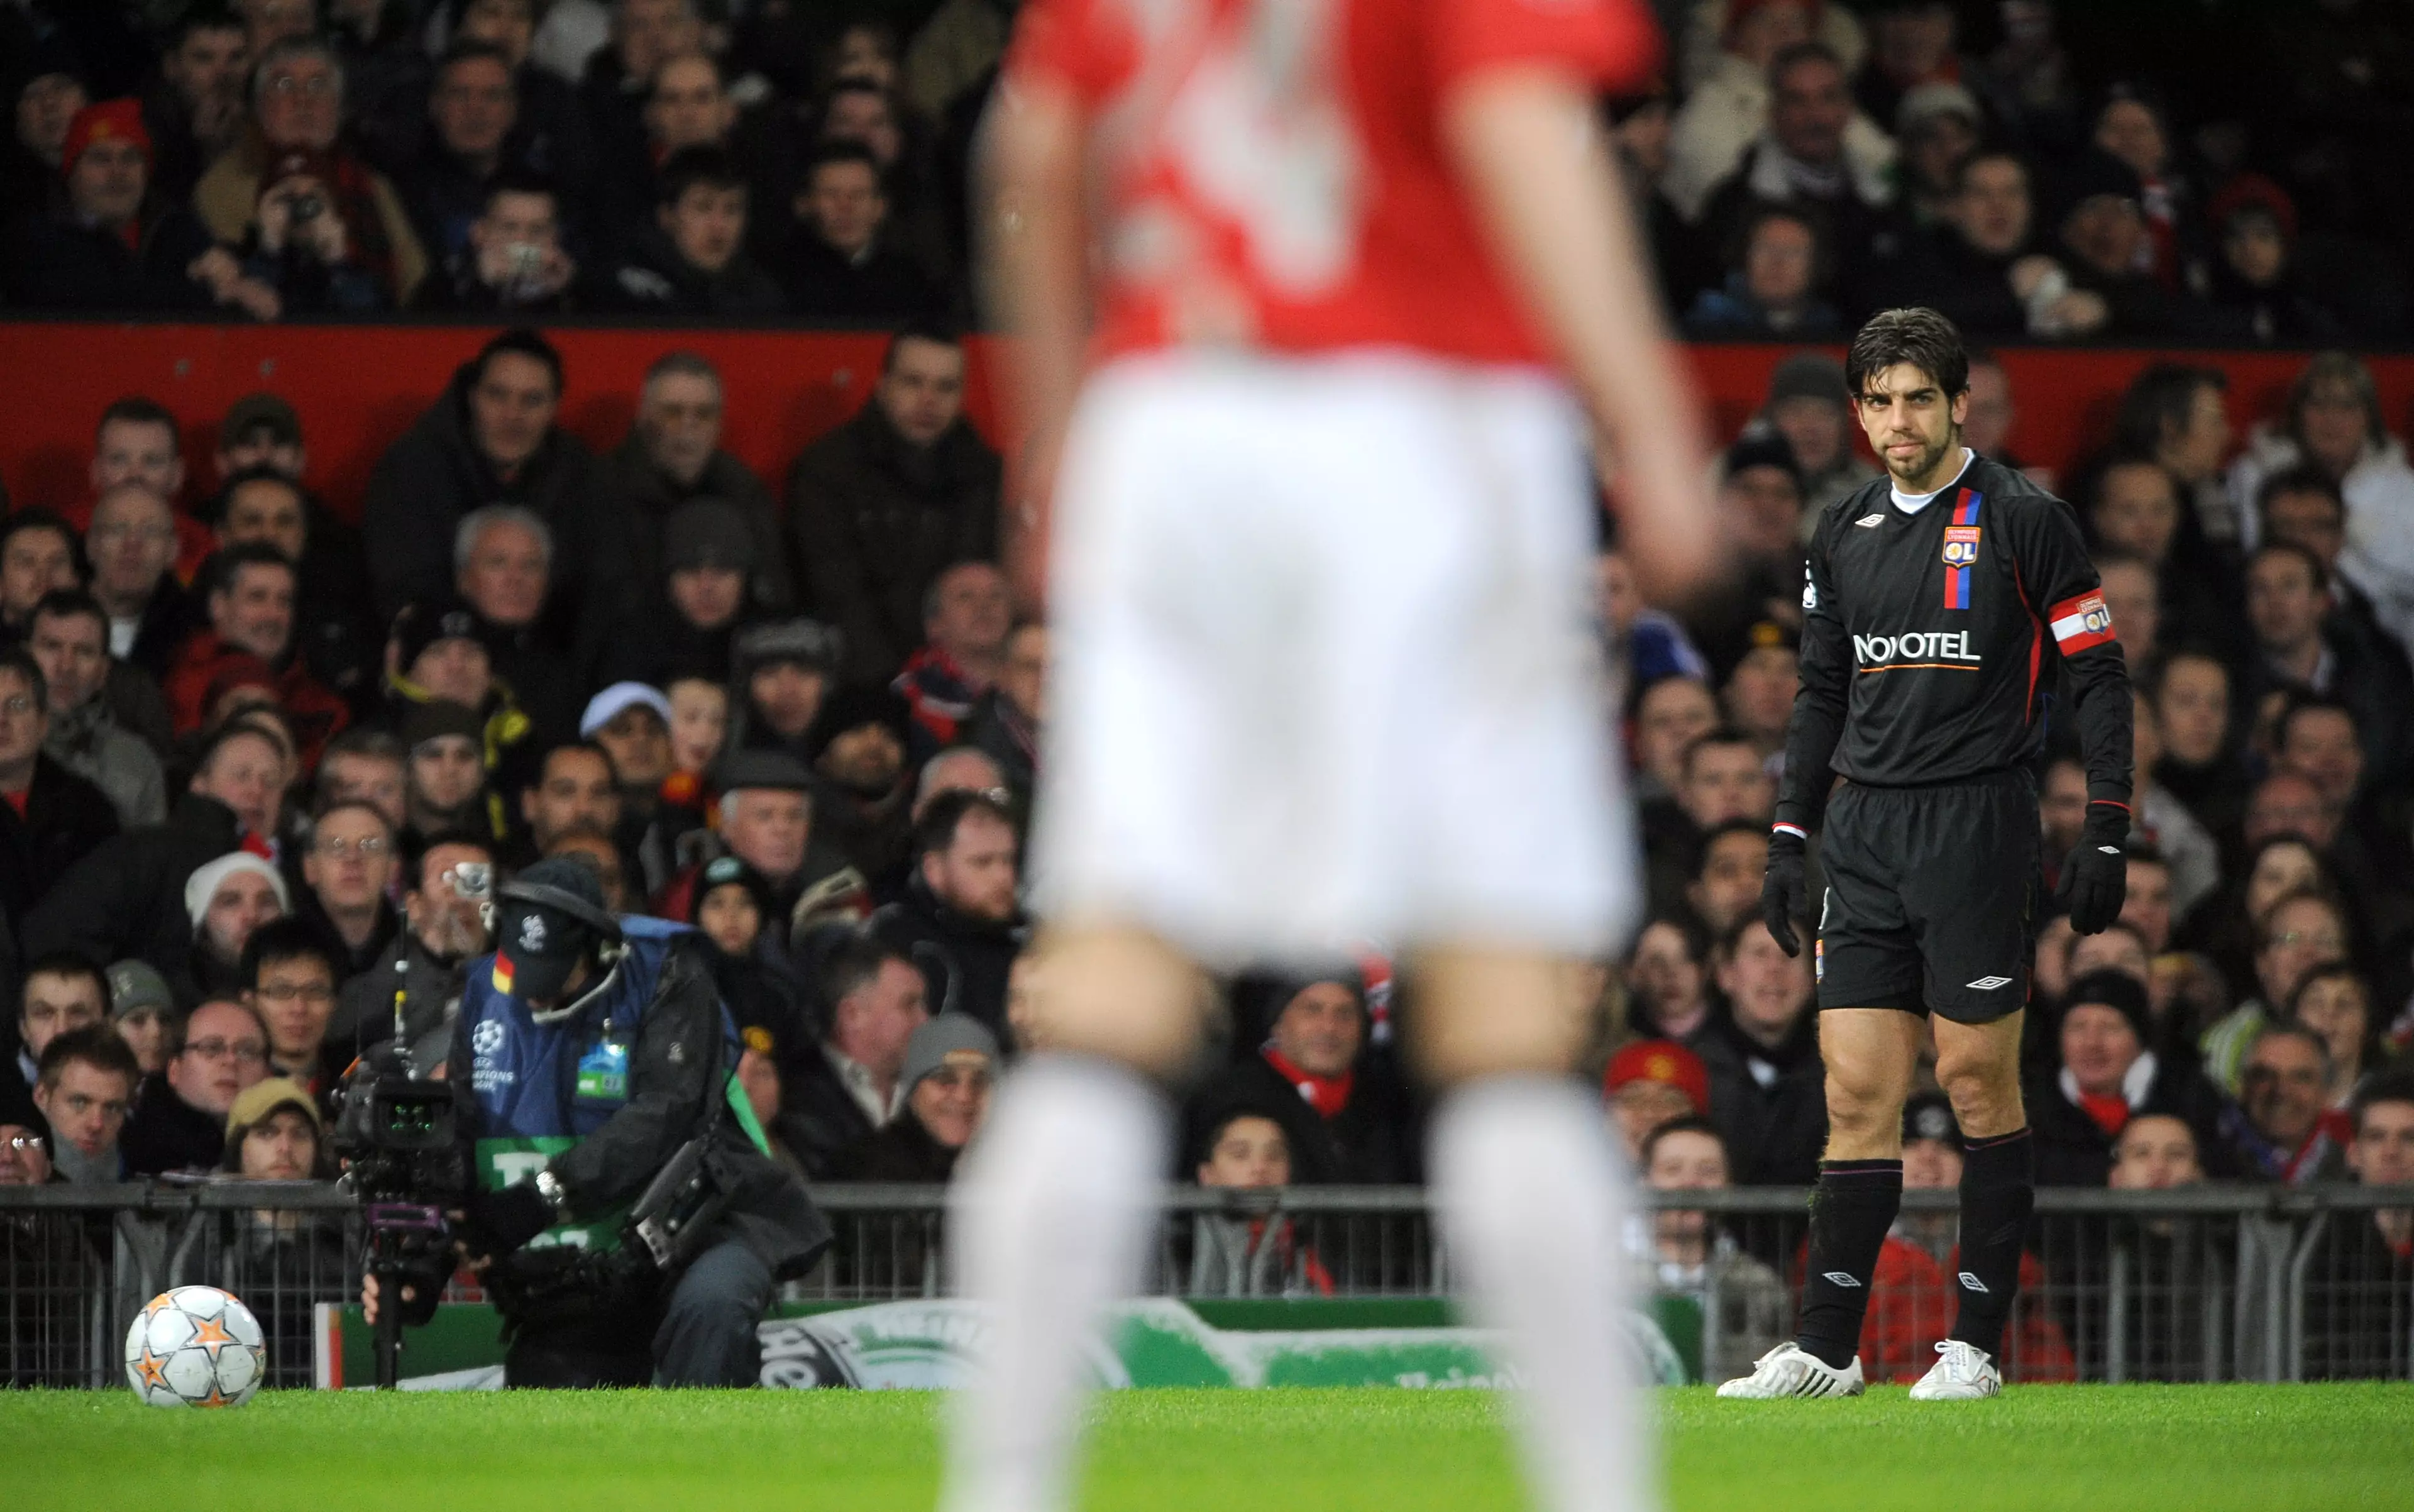 Juninho in his natural habitat, lining up a free kick for Lyon. Image: PA Images